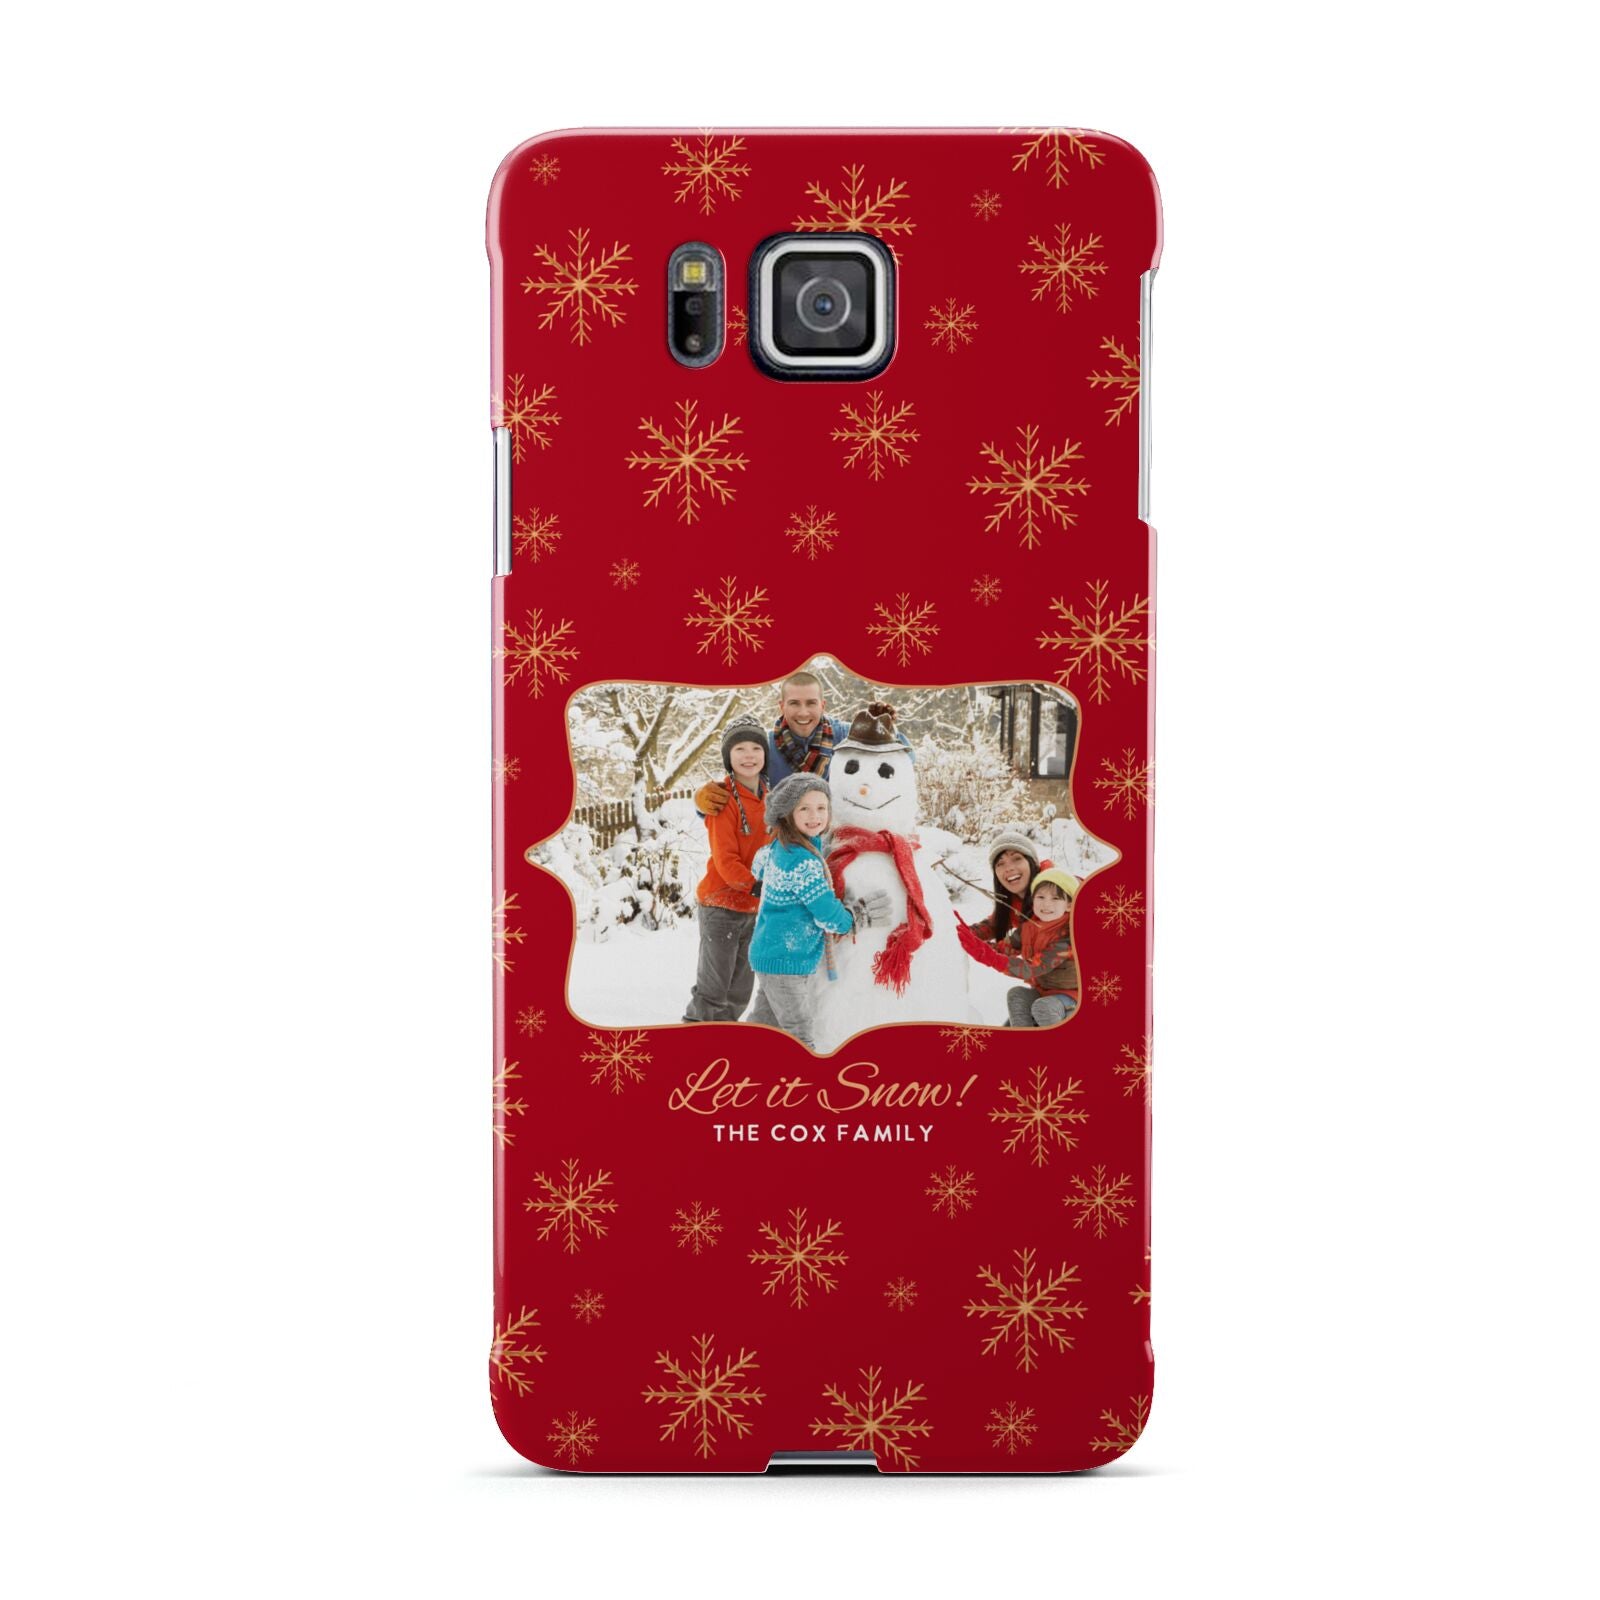 Let it Snow Christmas Photo Upload Samsung Galaxy Alpha Case